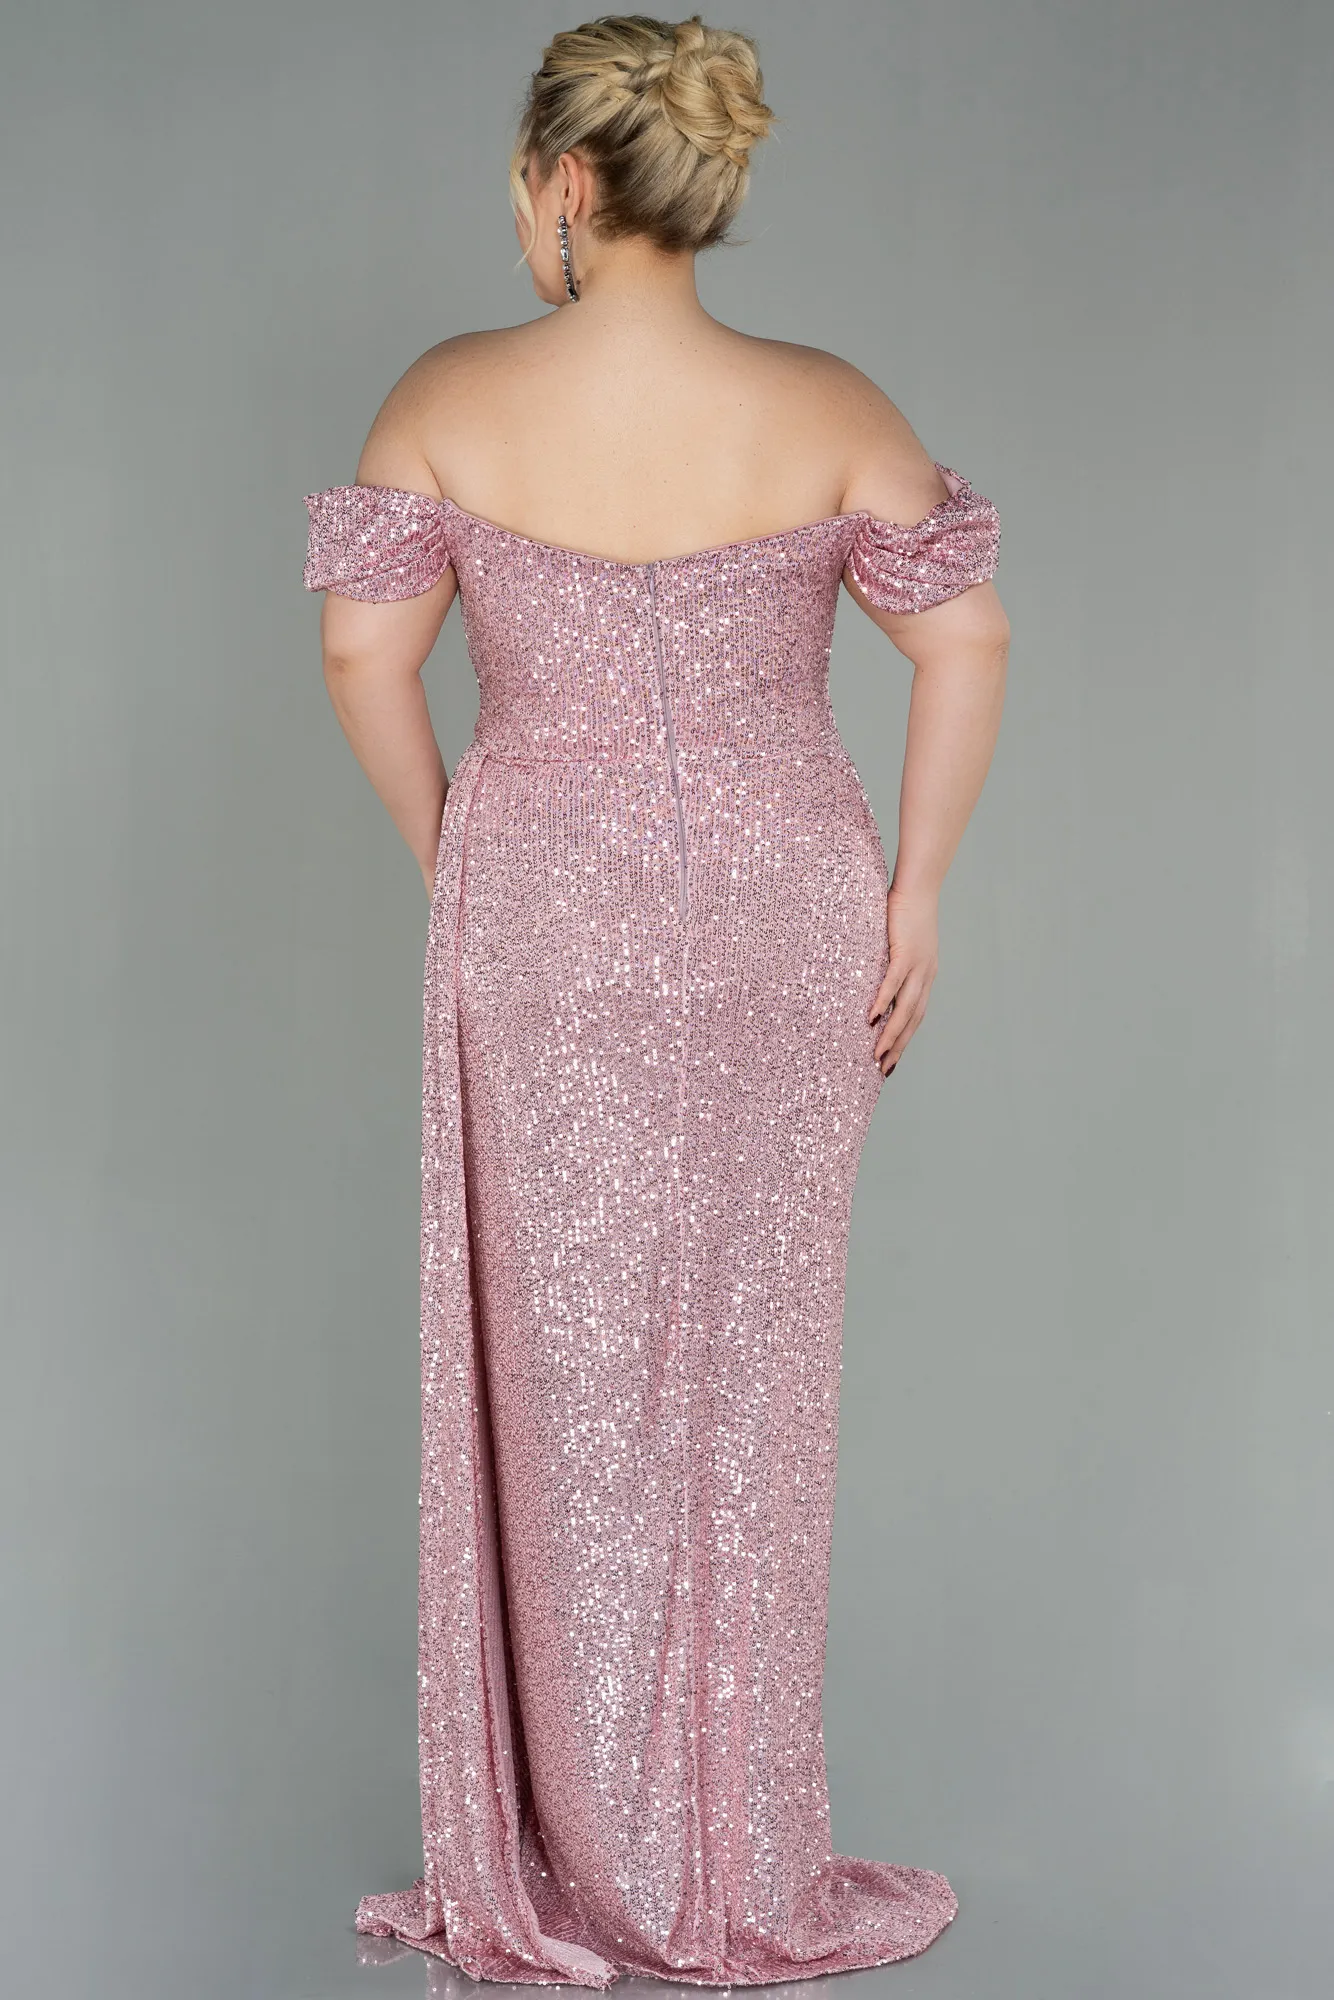 Powder Color-Long Scaly Plus Size Evening Dress ABU2973